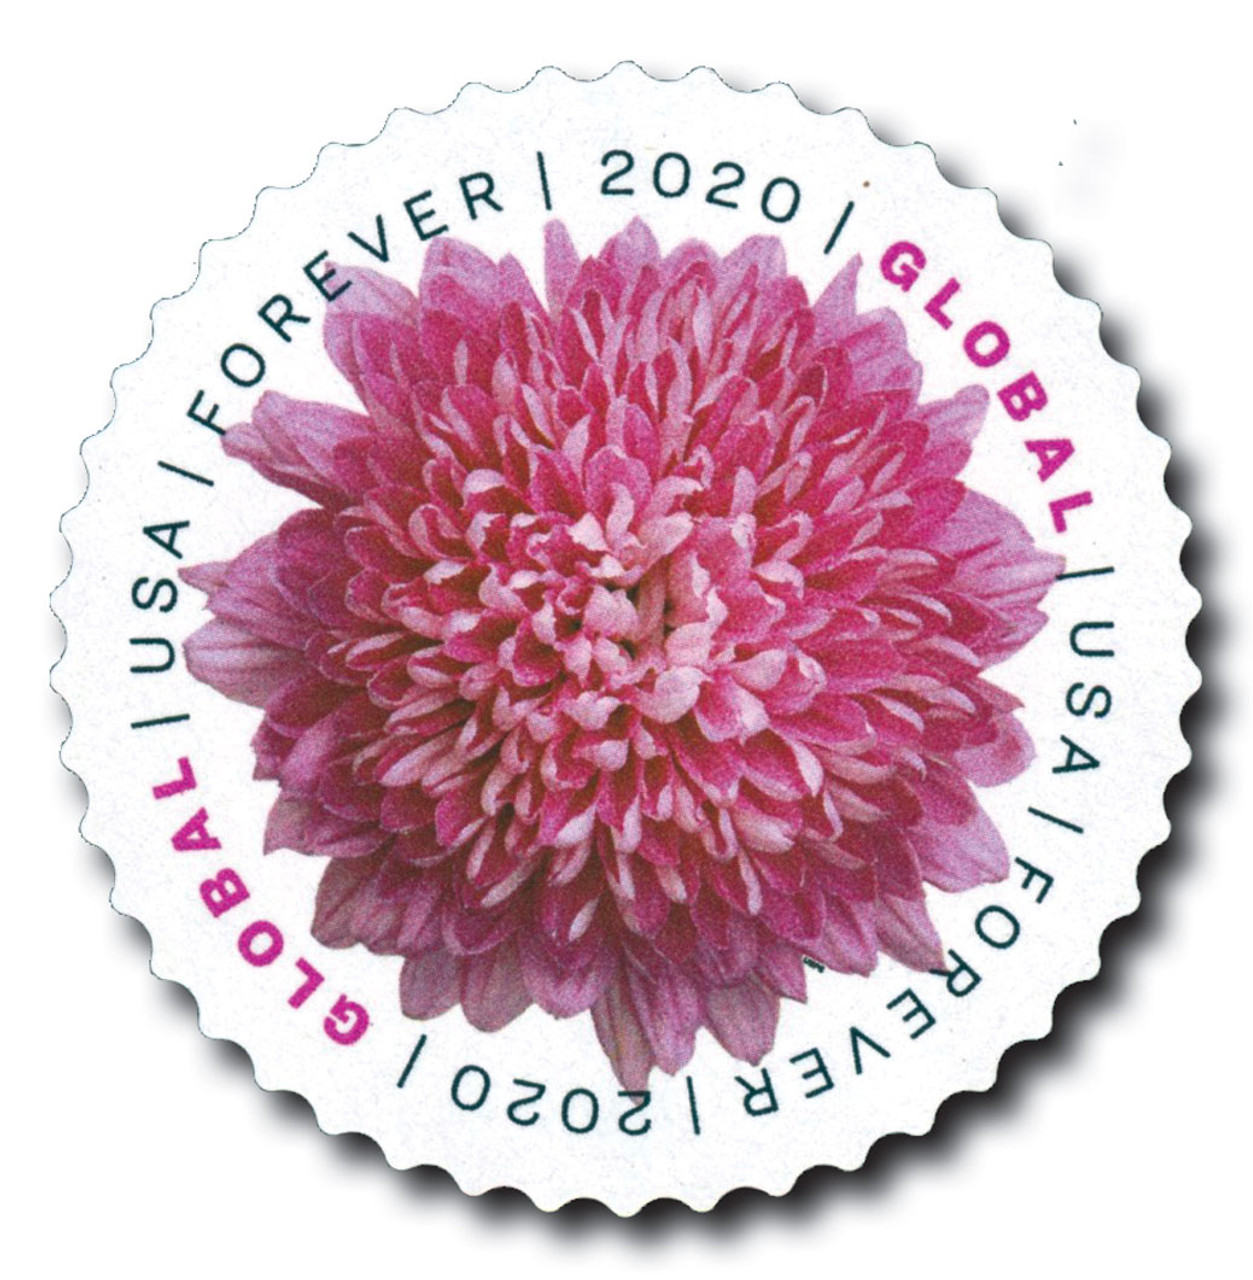 5460 - 2020 Global Forever Stamp - Chrysanthemum - Mystic Stamp